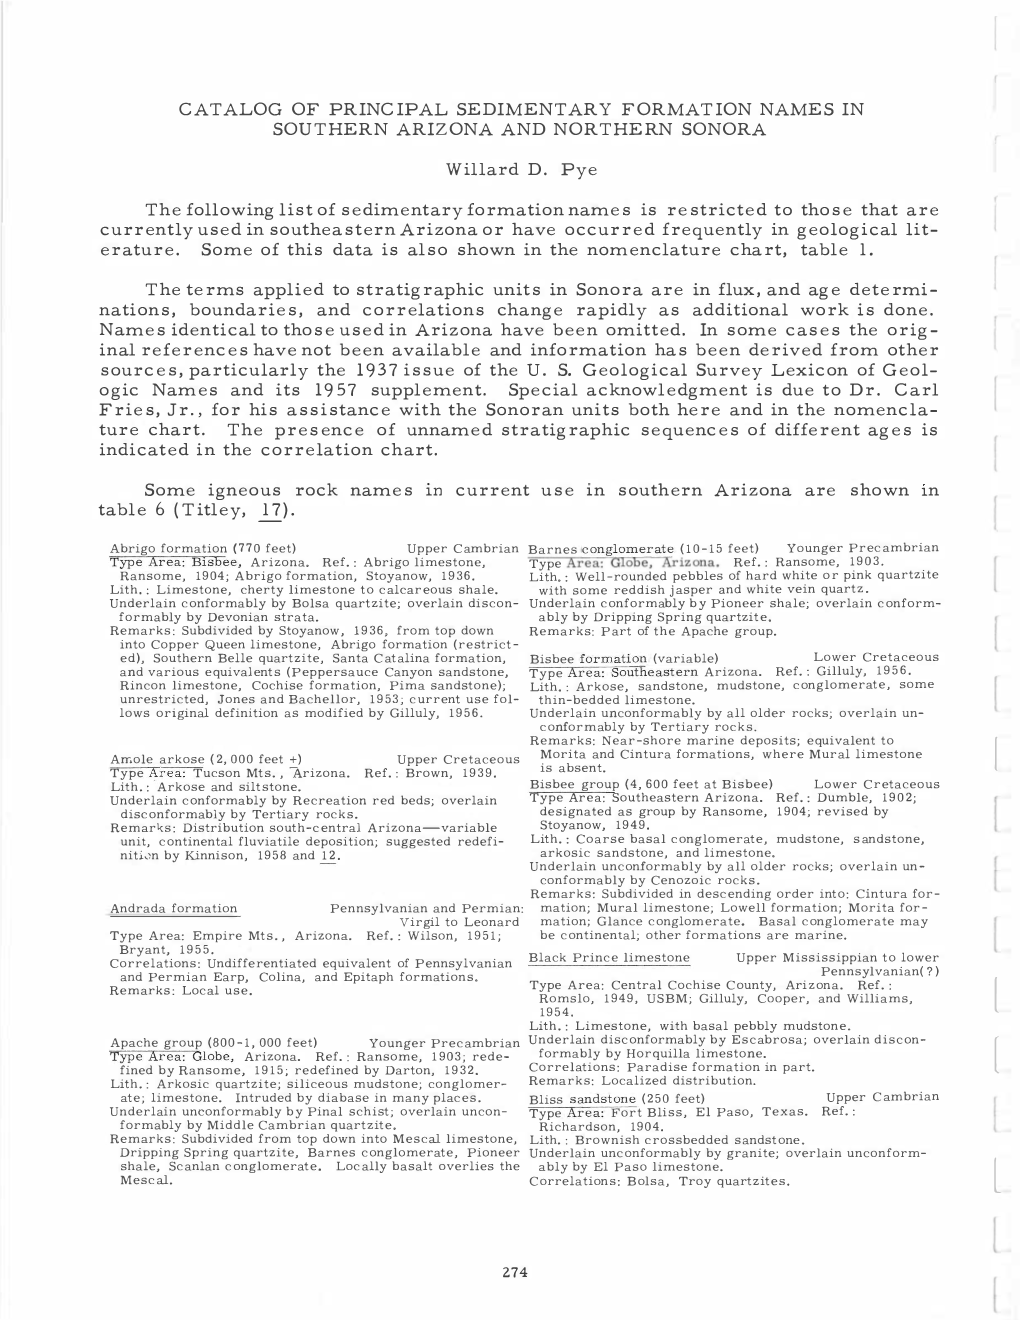 Catalog of Principal Sedimentary Formation Names in Southern Arizona and Northern Sonora